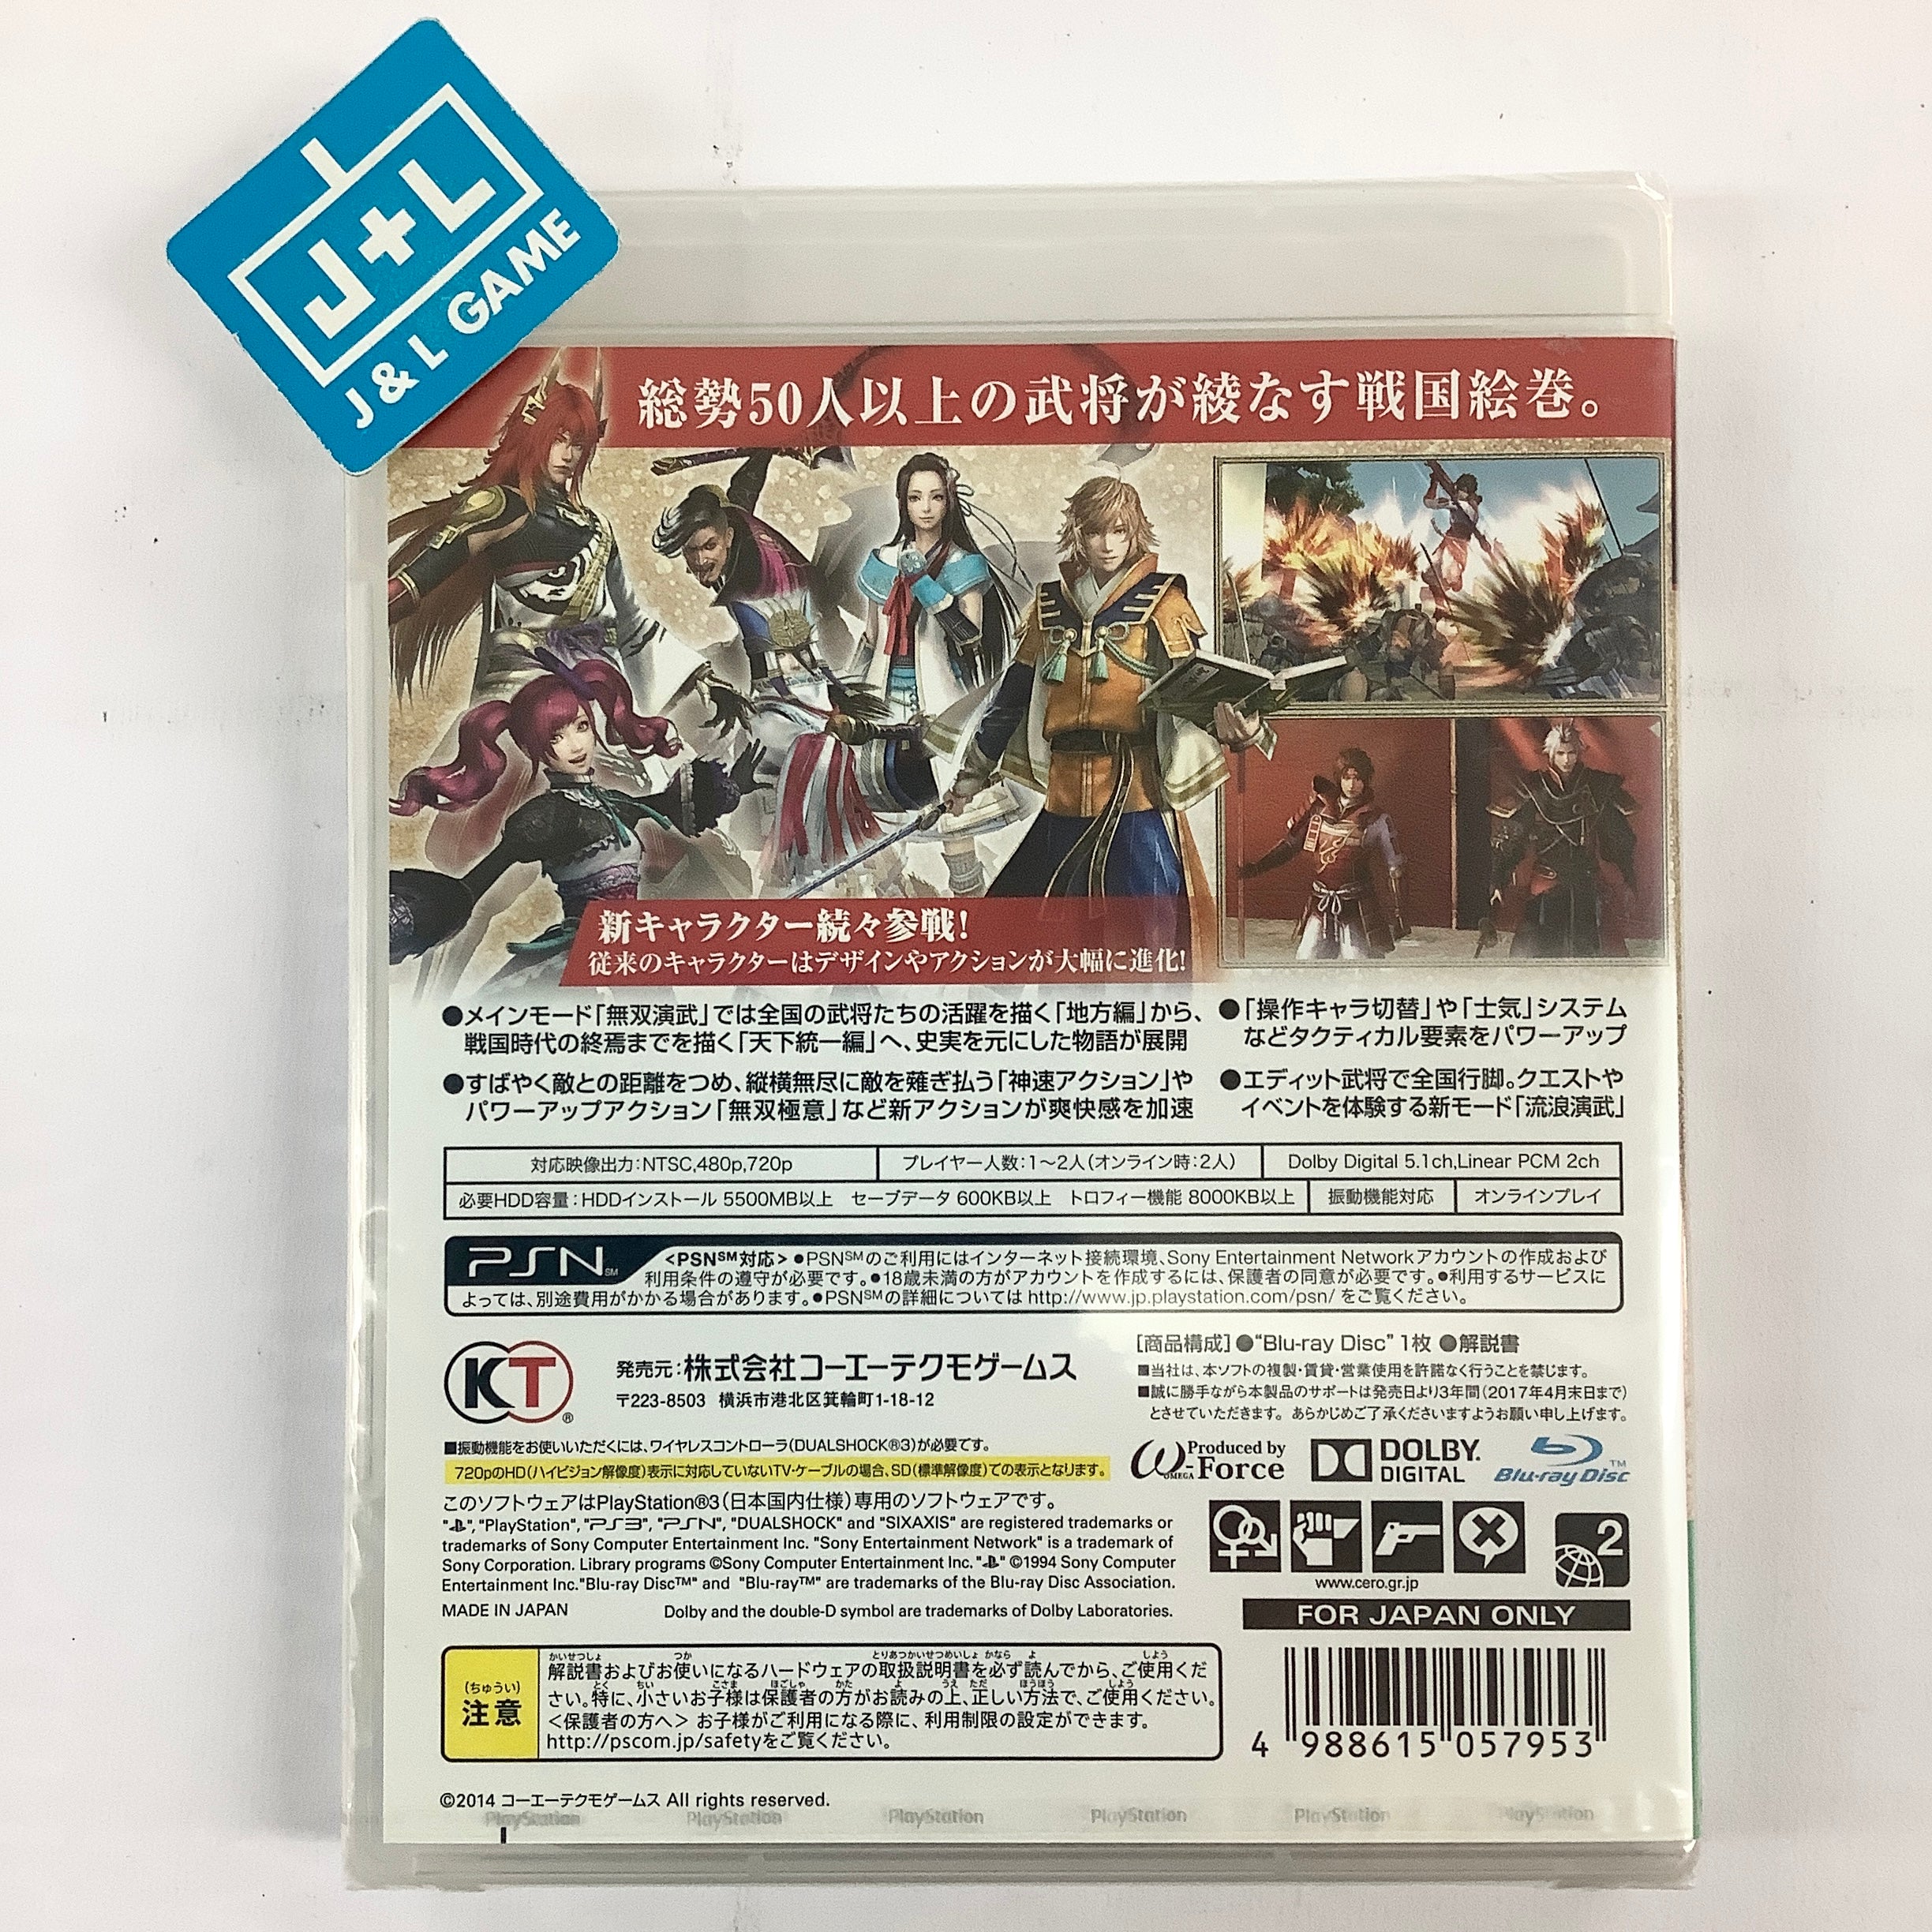 Sengoku Musou 4 - (PS3) PlayStation 3 (Japanese Import) Video Games Koei Tecmo Games   